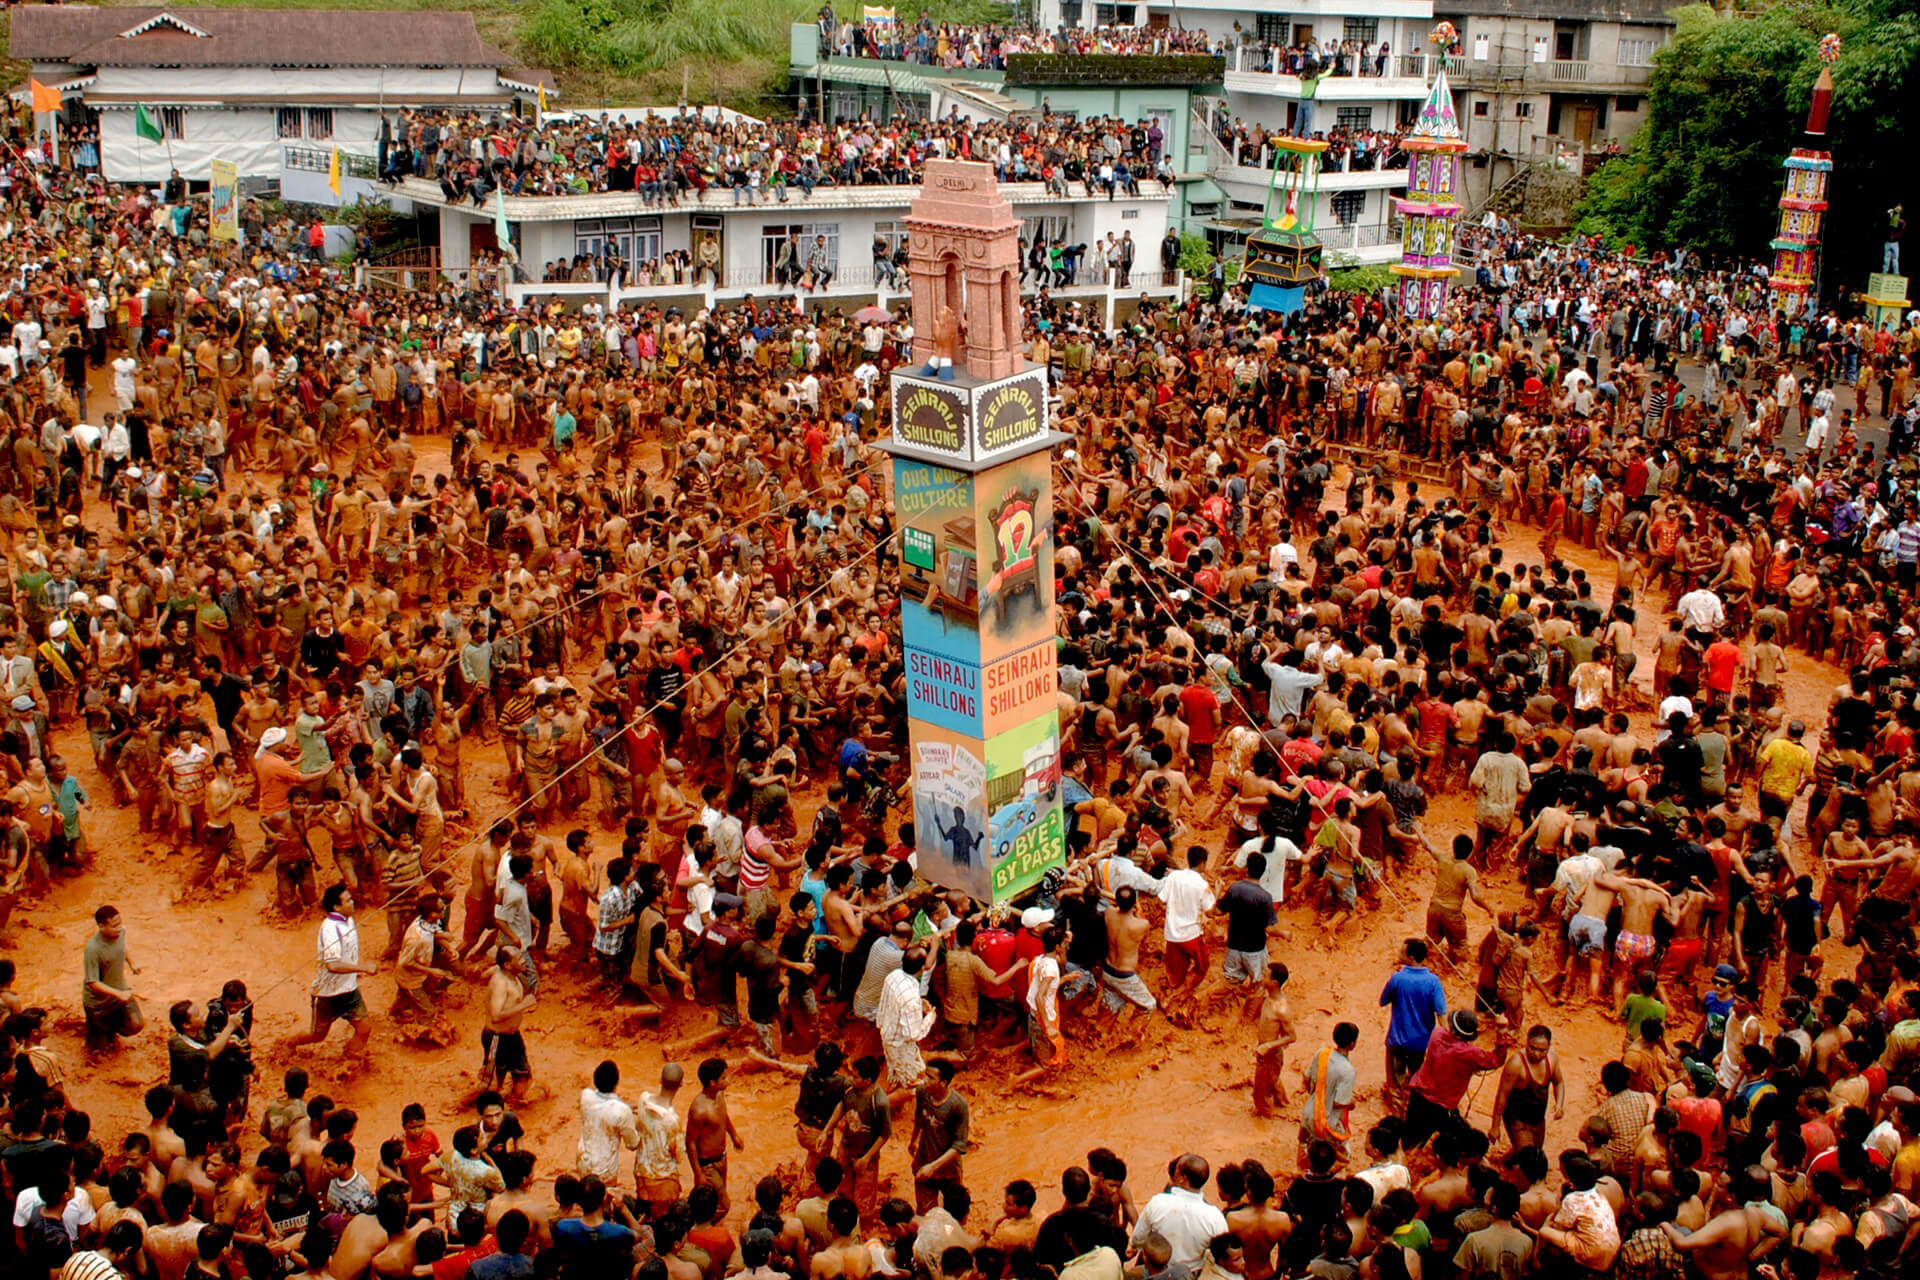 Behdienkhlam Festival